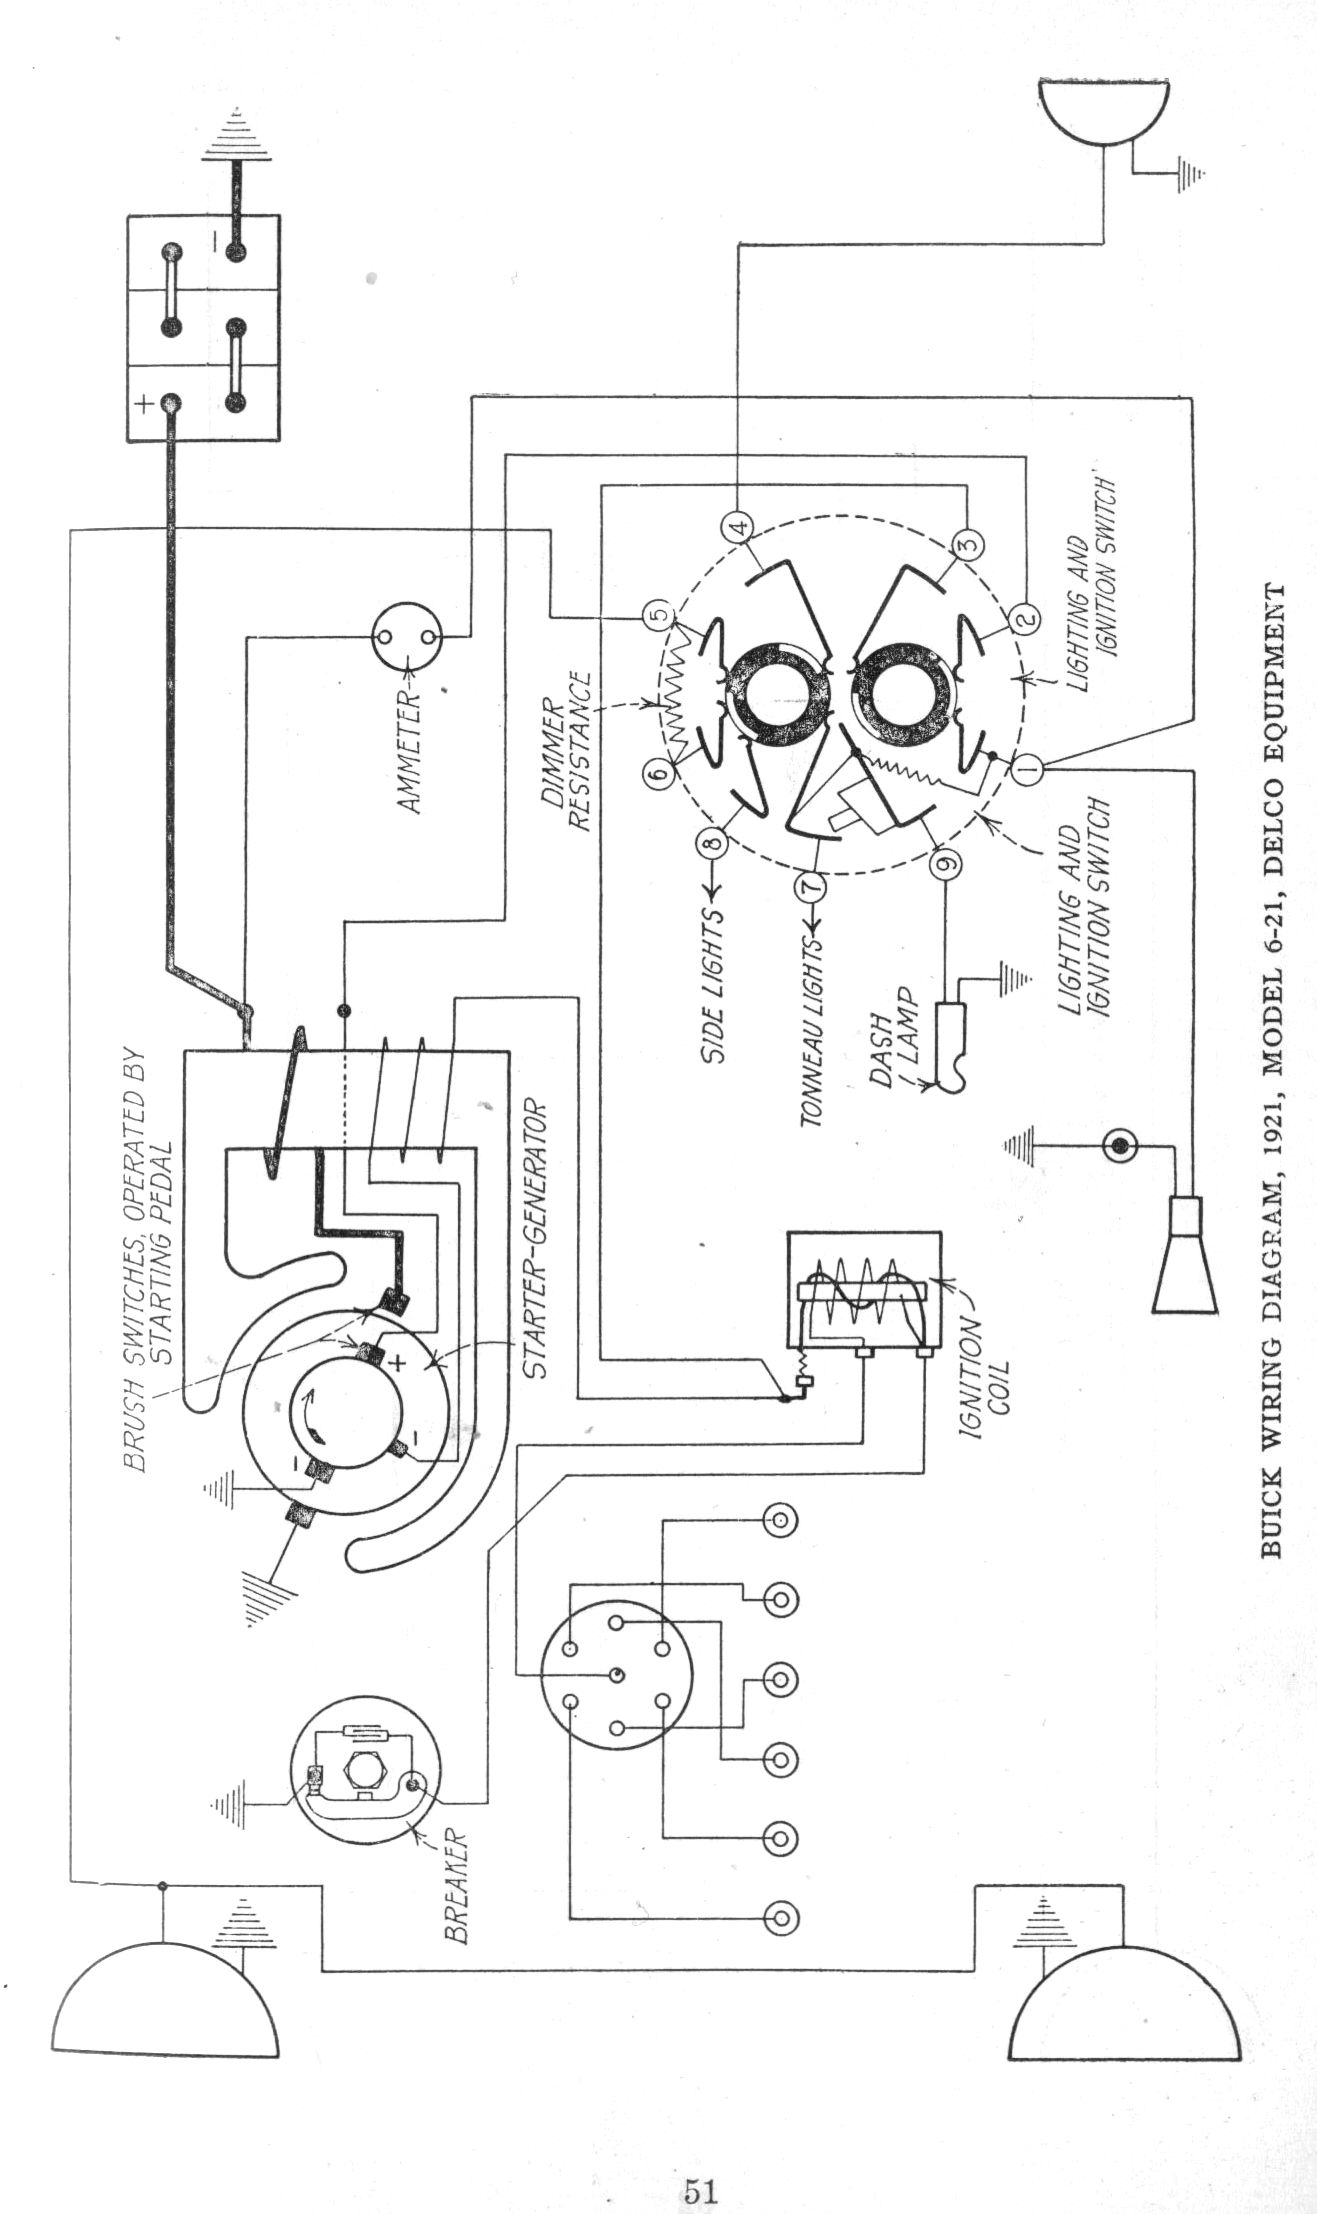 [DIAGRAM] Chevrolet Model K 1925 Car Wiring Electrical Diagram ...